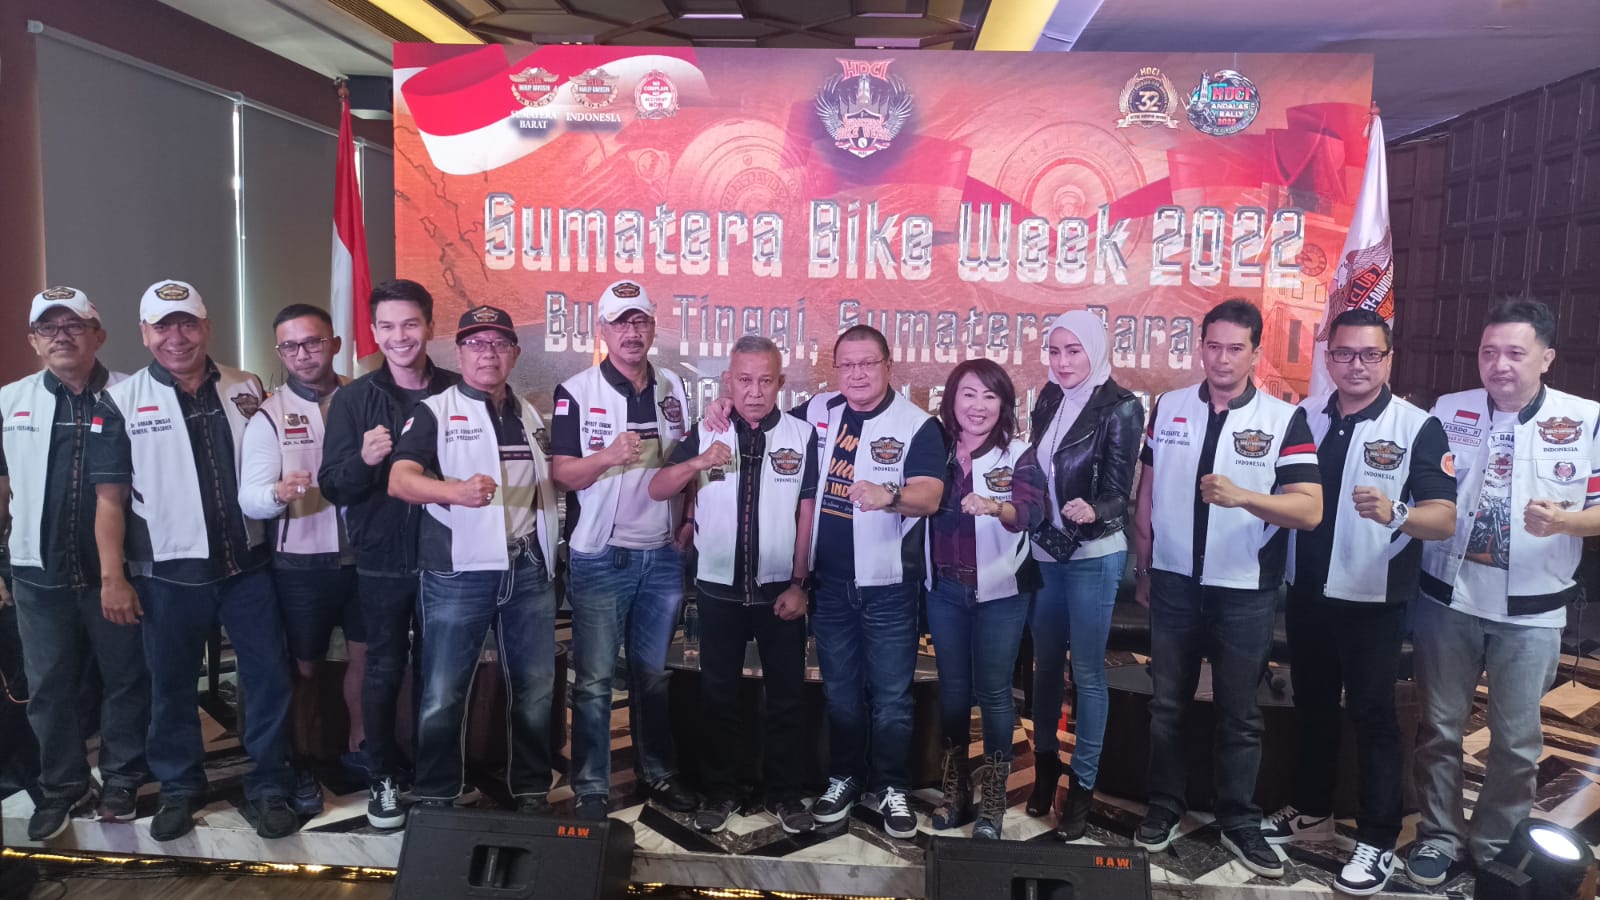 Ribuan Bikers Harley Siap Turing Lintas Sumatera Menuju Sumatera Bike Week 2022 di Bukit Tinggi